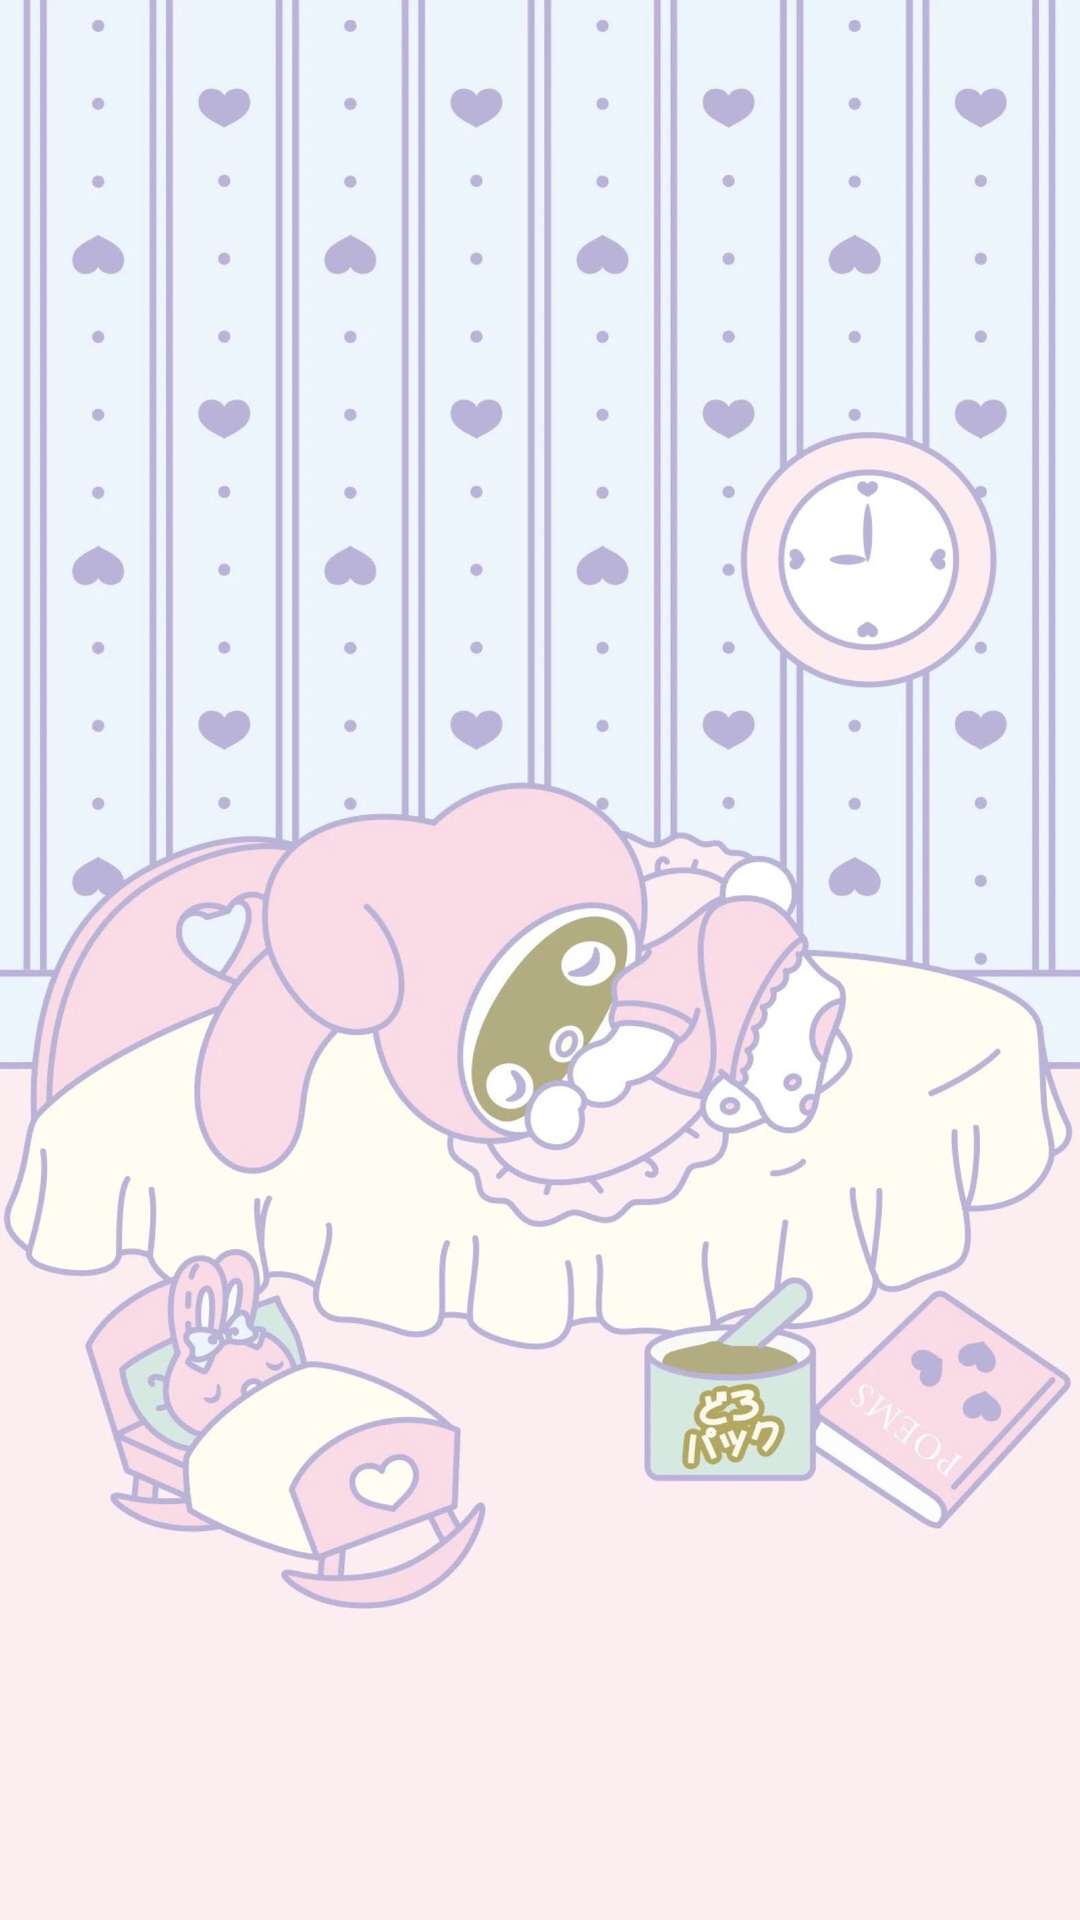 25 Anime Girl Pink Wallpapers  WallpaperSafari